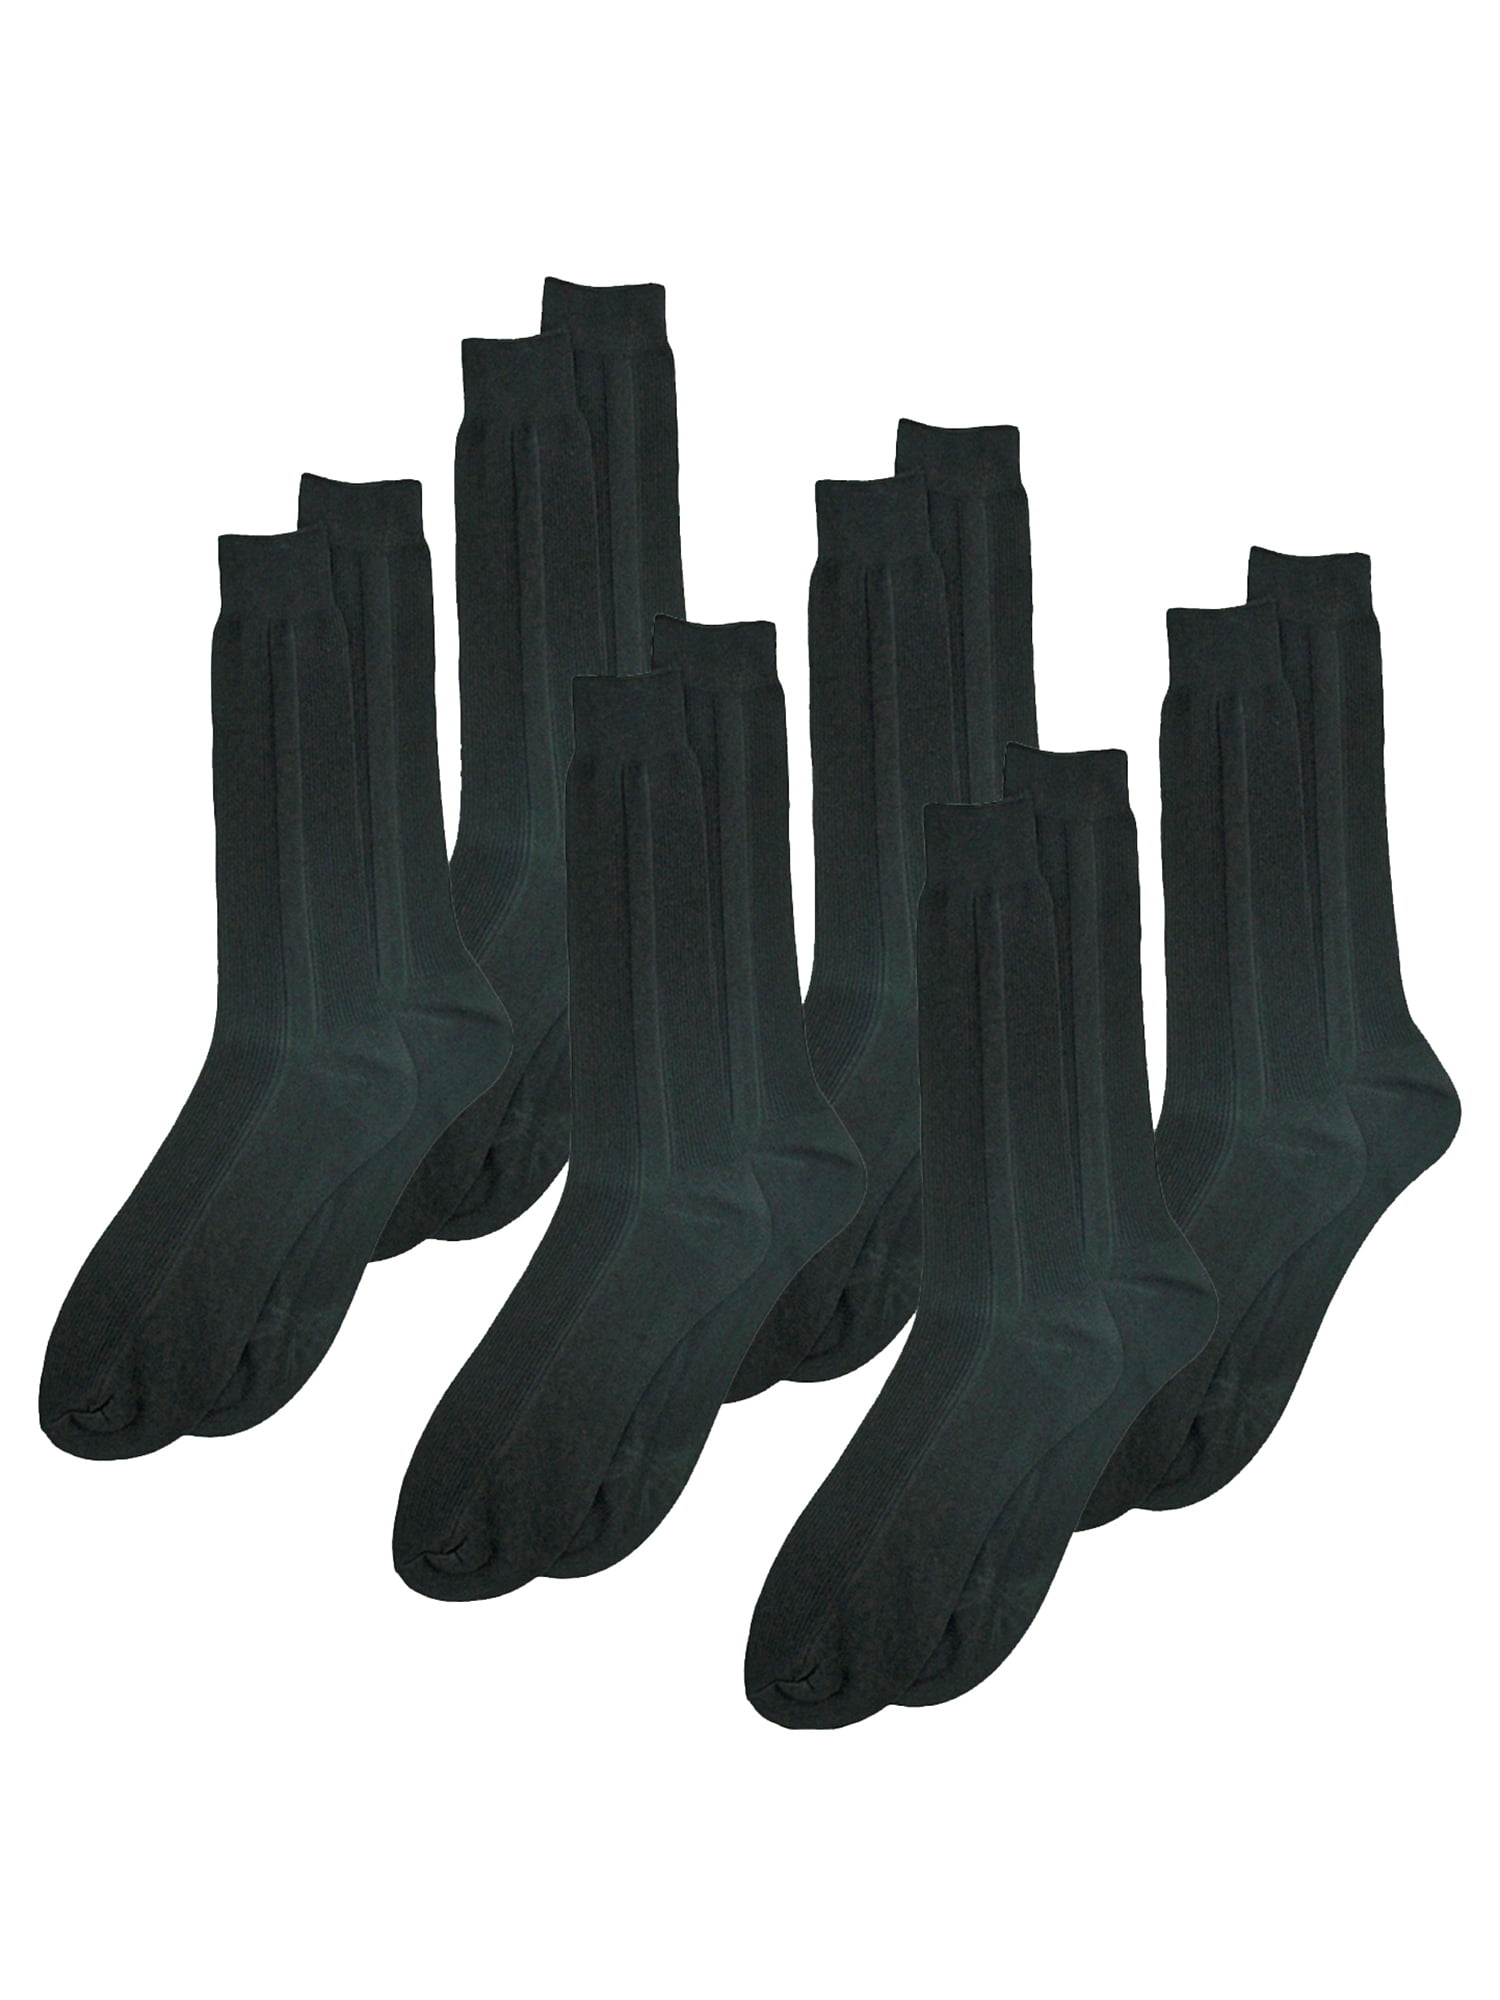 black dress socks